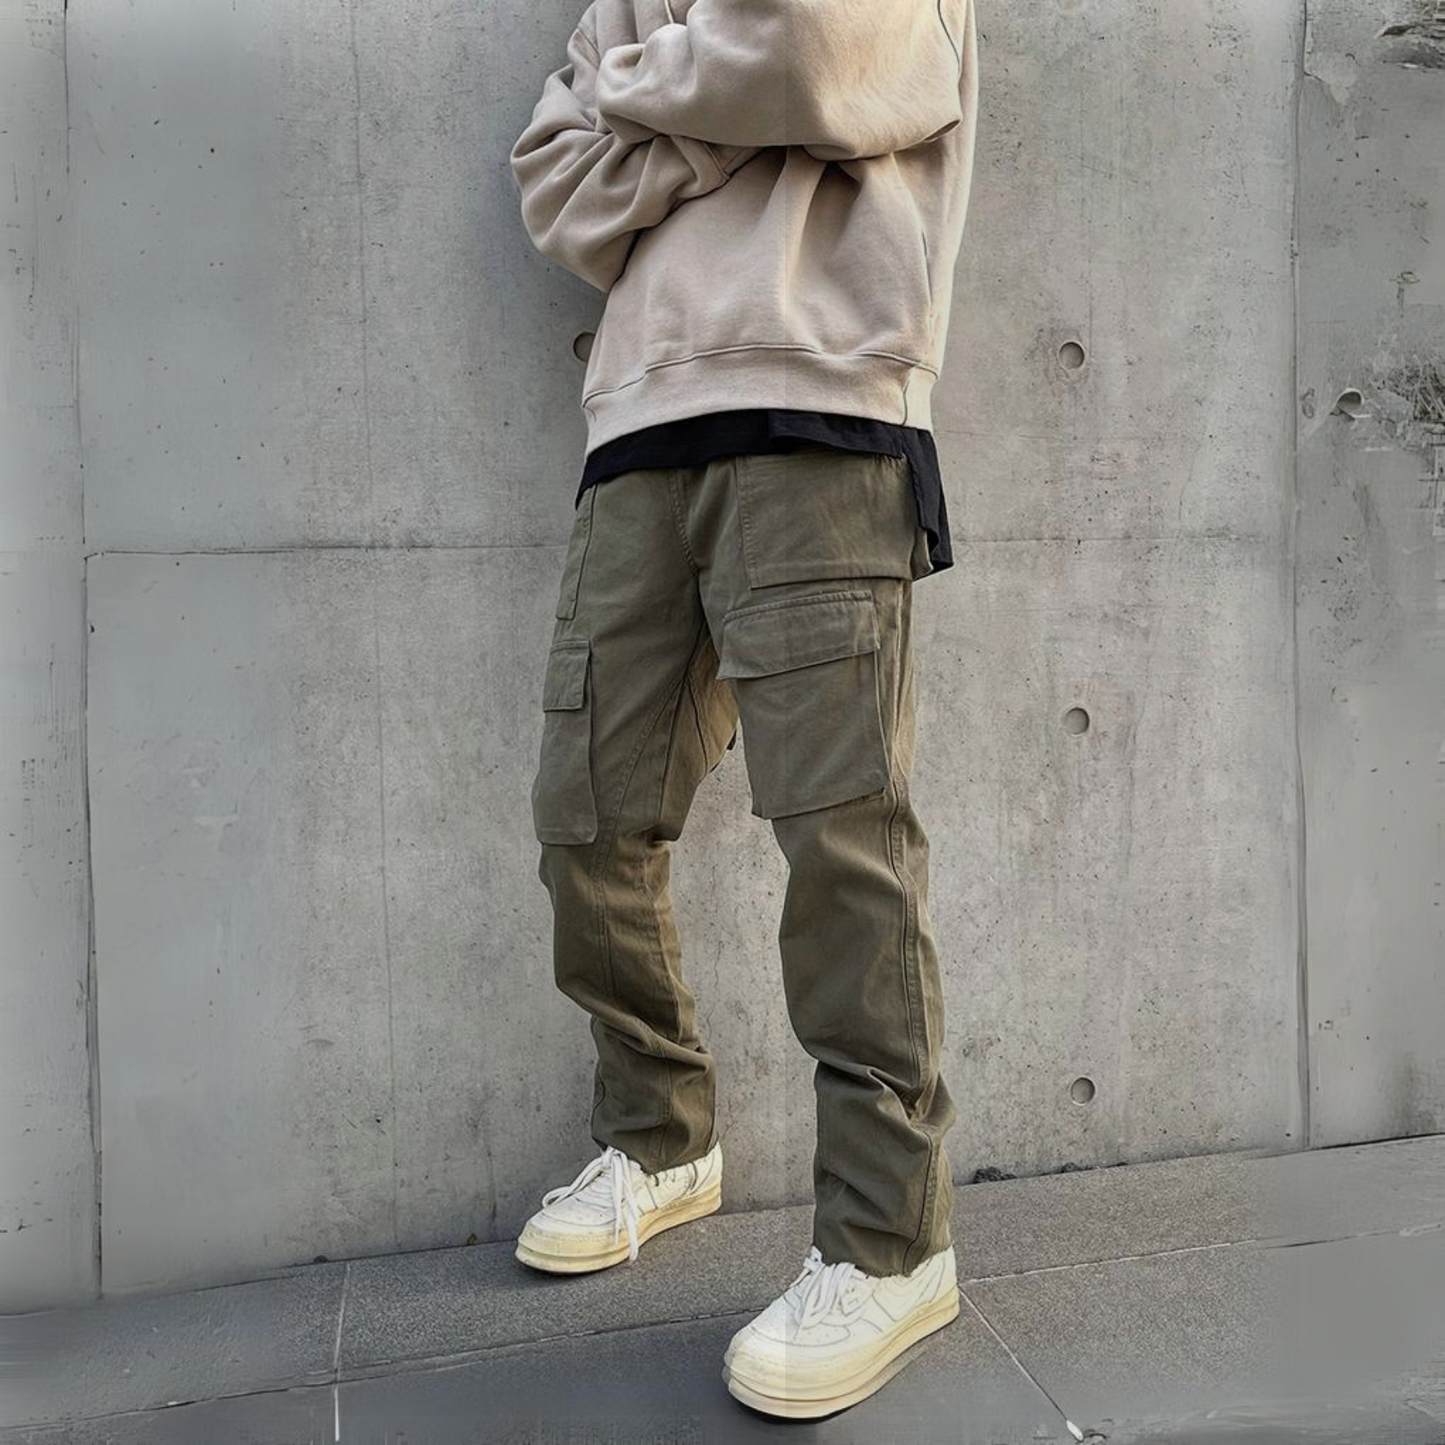 green cargo pants; mens camo cargo pants streetwear fit, urban grey wall and model with arms crossed wearing beige sweatshirt